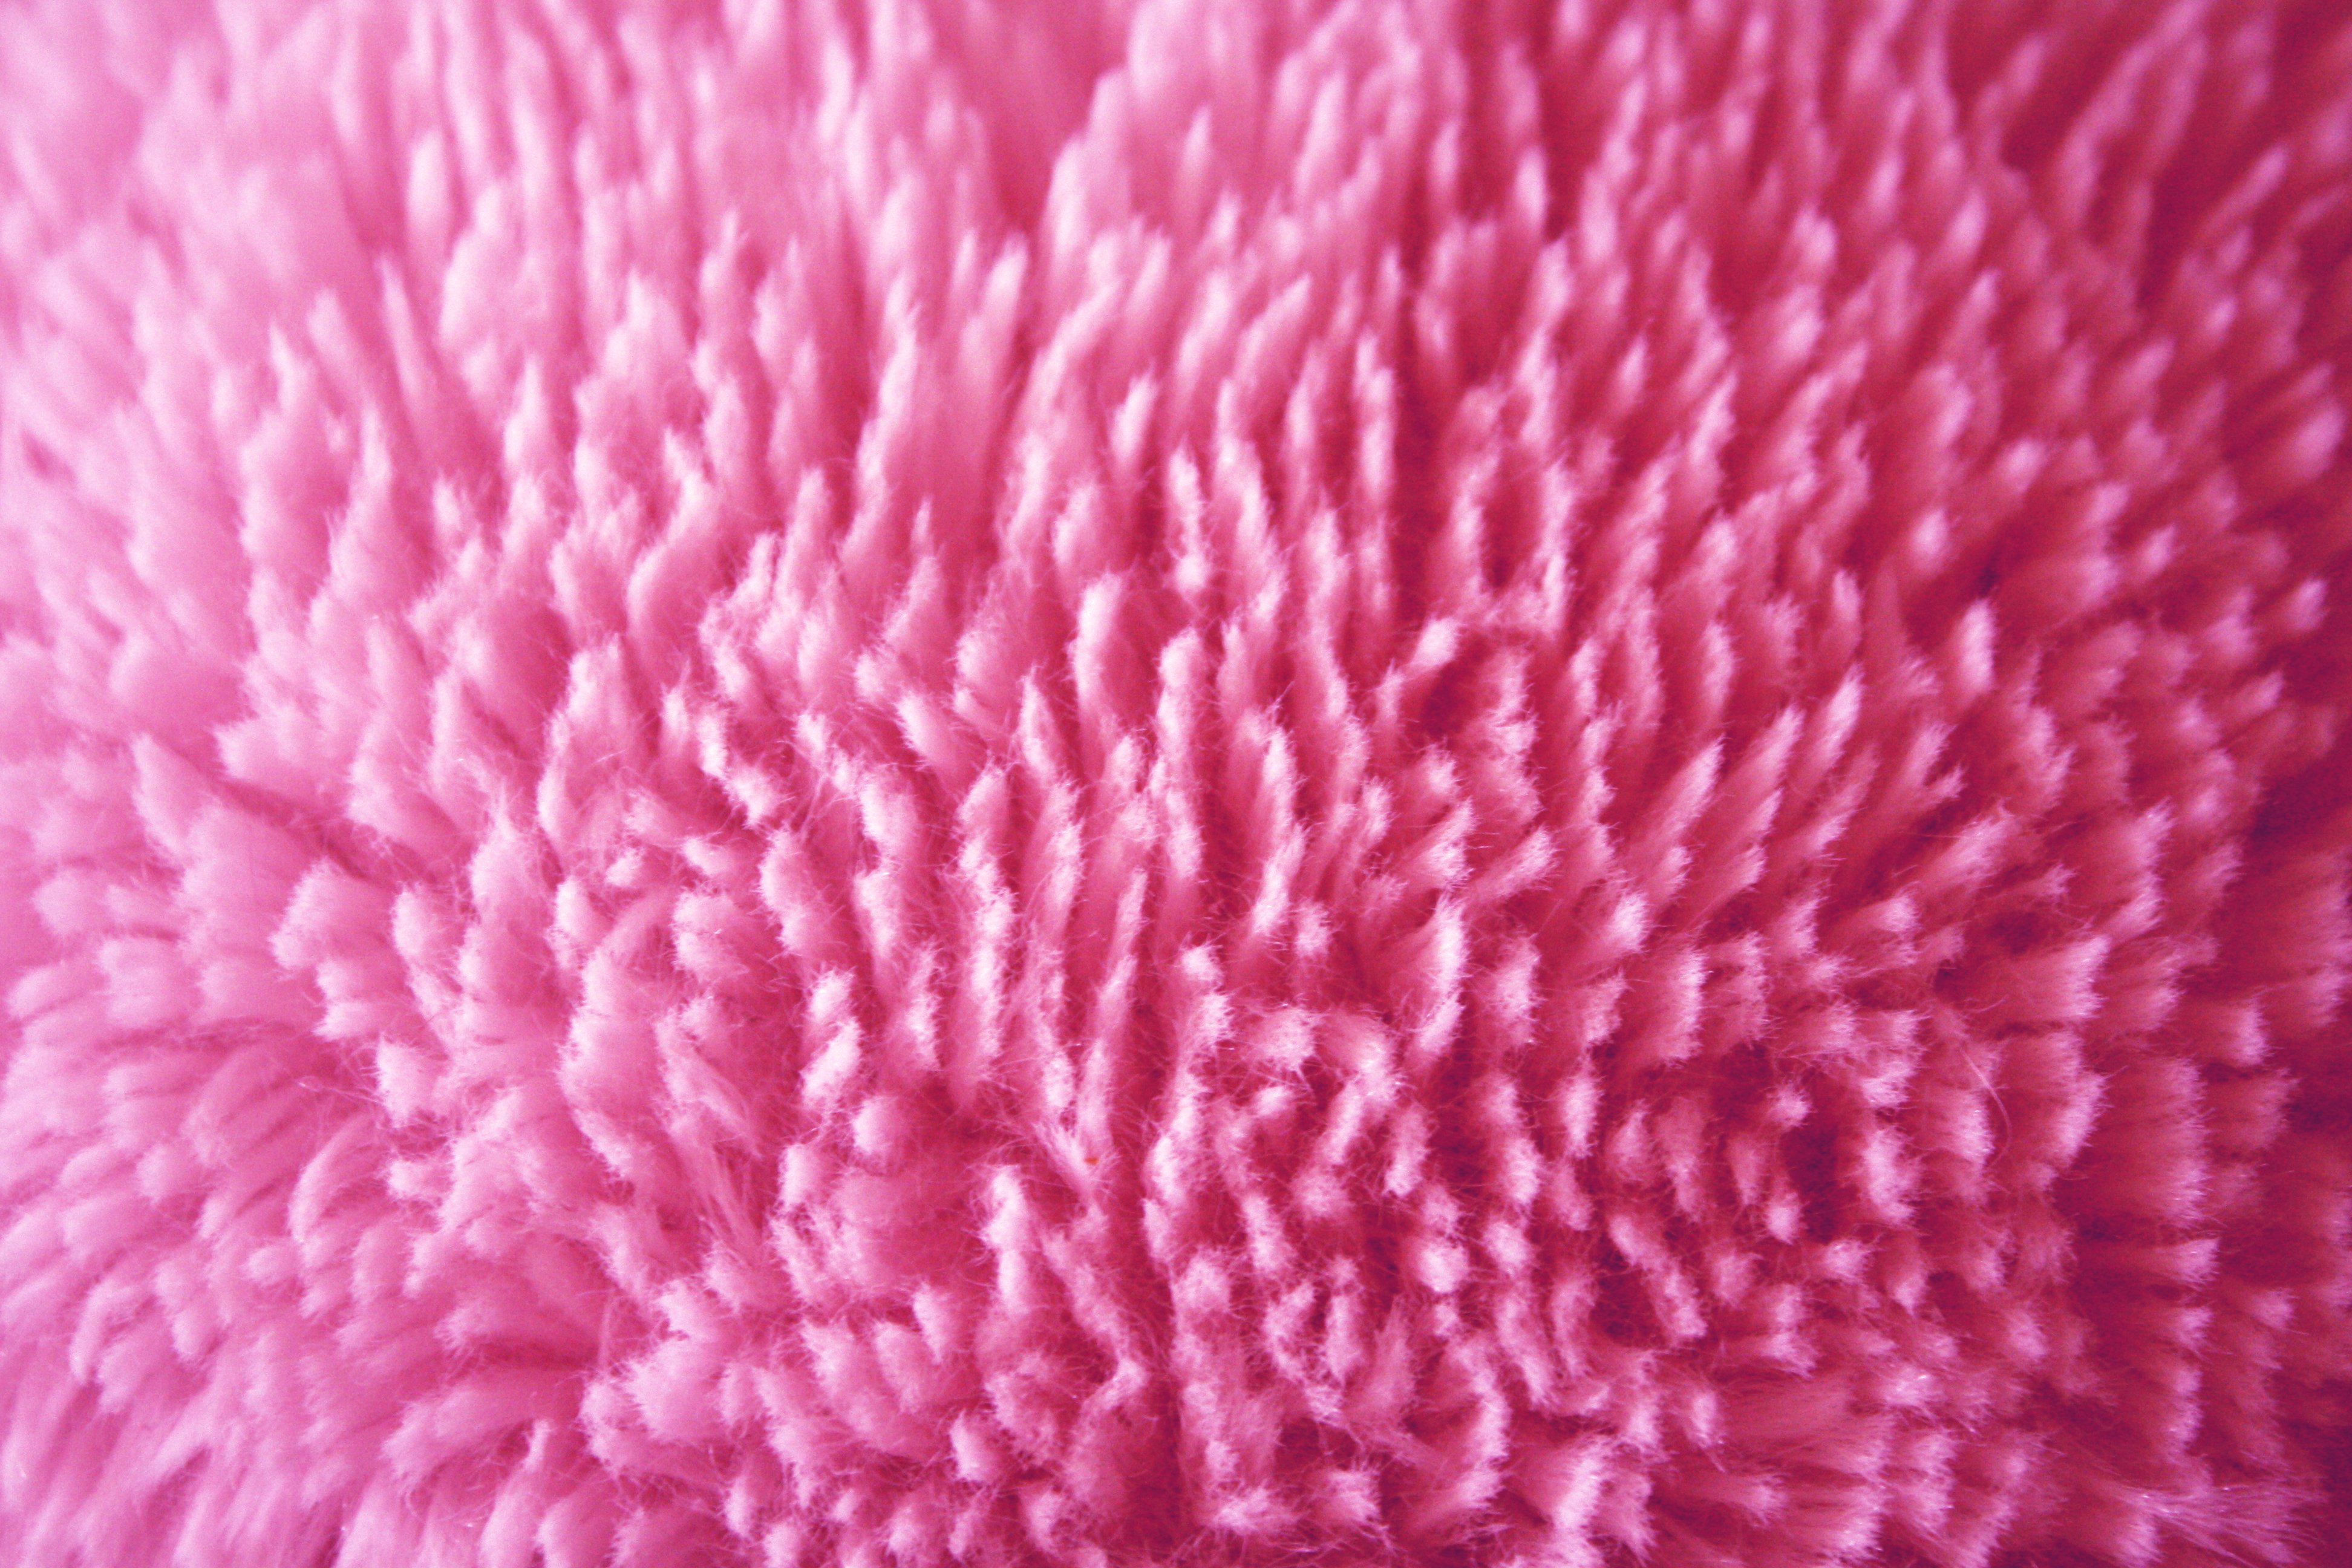 plush-pink-fabric-texture.jpg (3888×2592)